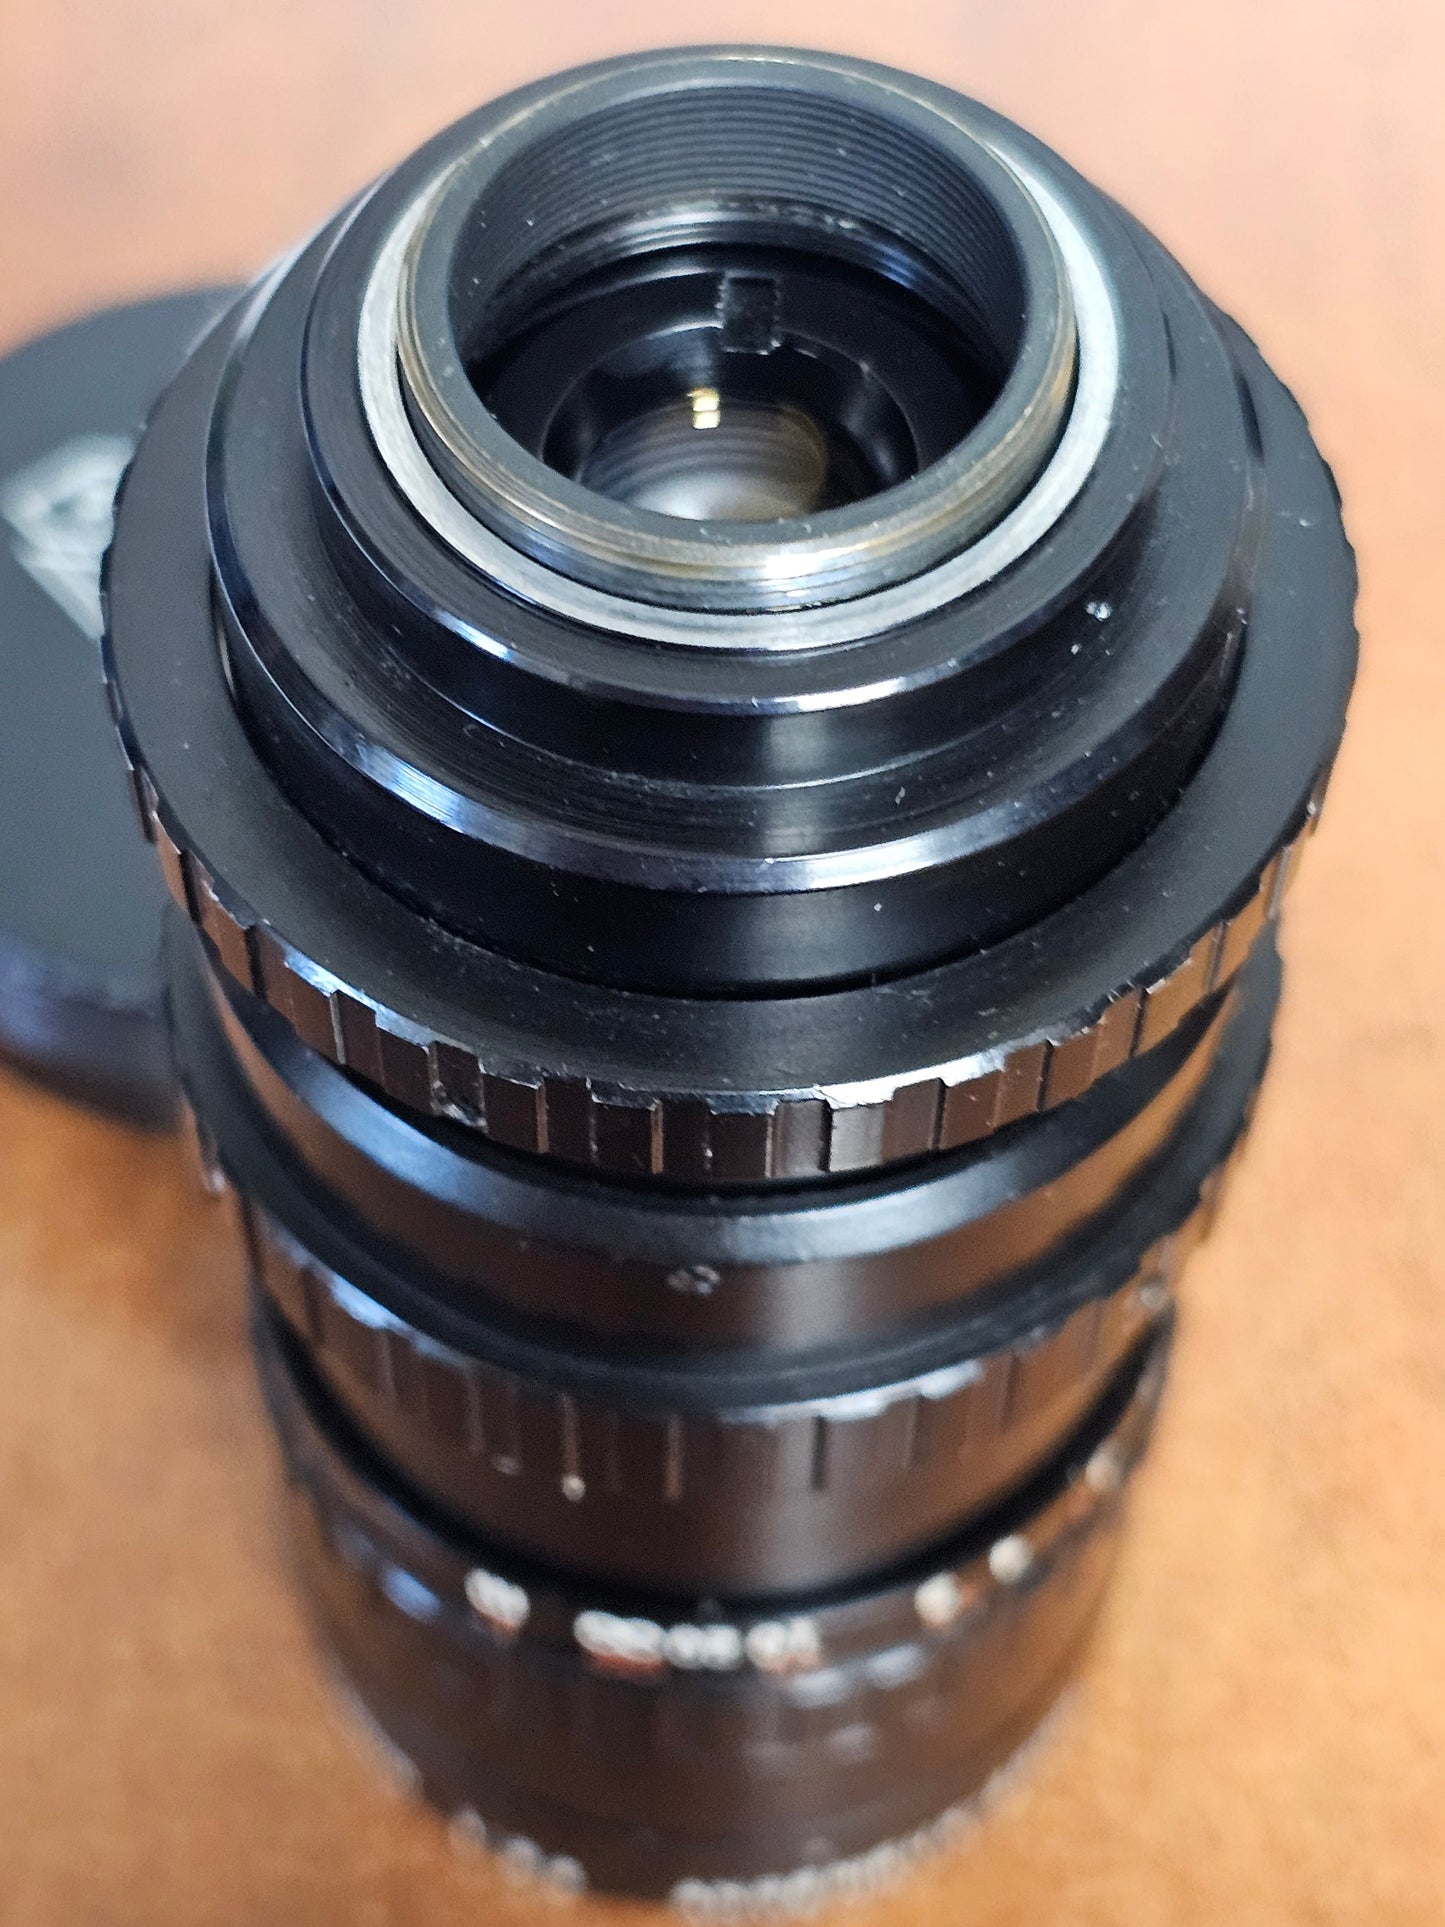 Angenieux 17-68mm f2.2/T2.5 C-Mount Zoom lens Type 4x17B (Black Version) S# 1297901